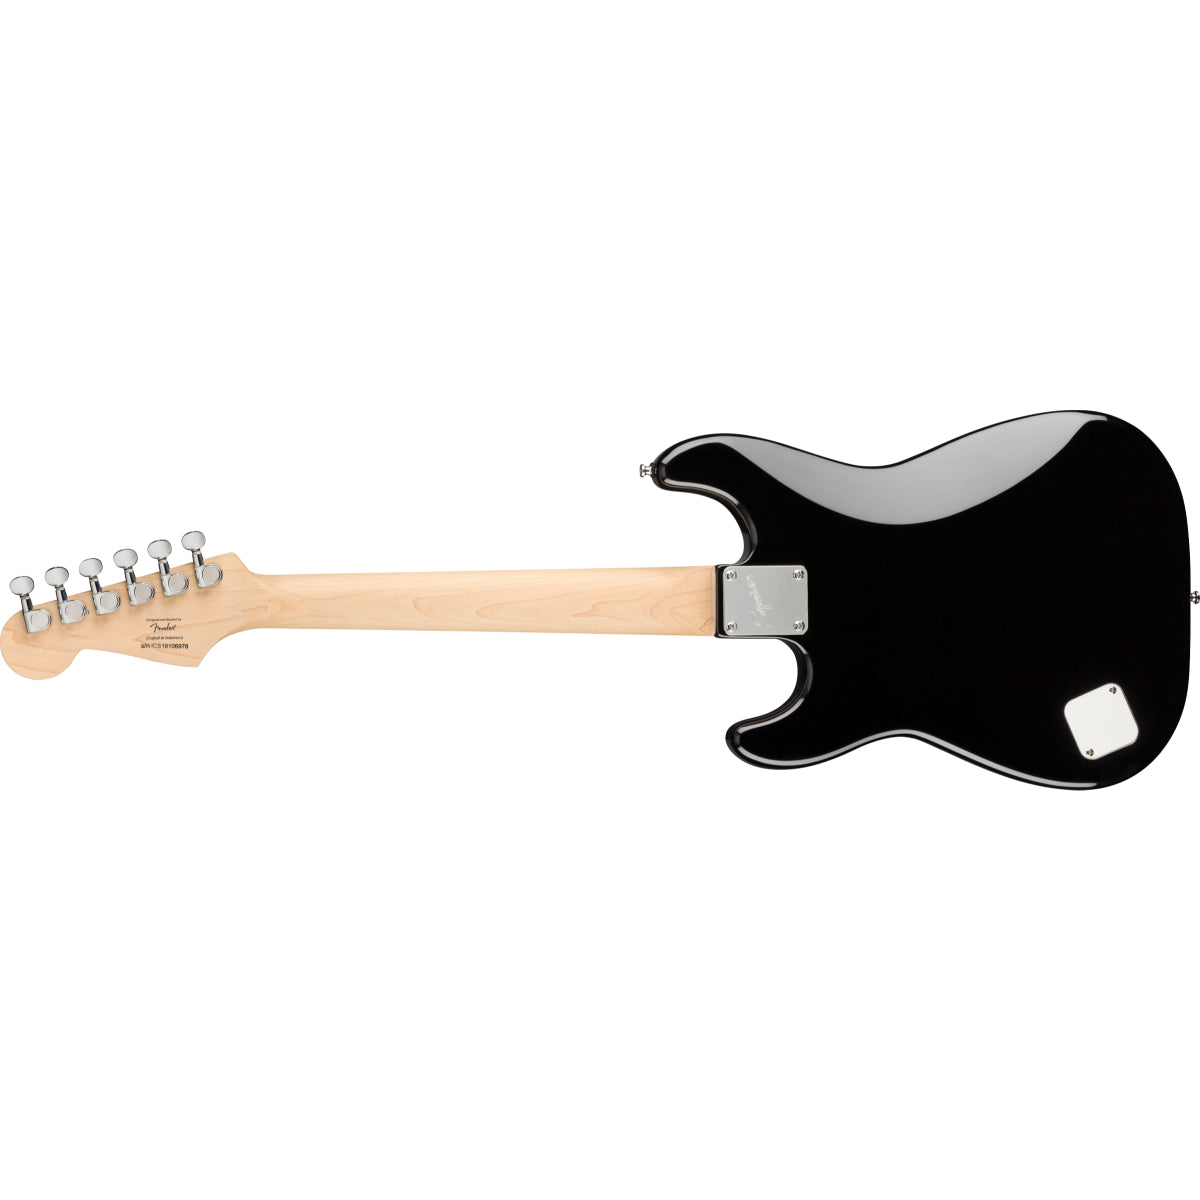 Mini Stratacaster - Laurel fingerboard - Black